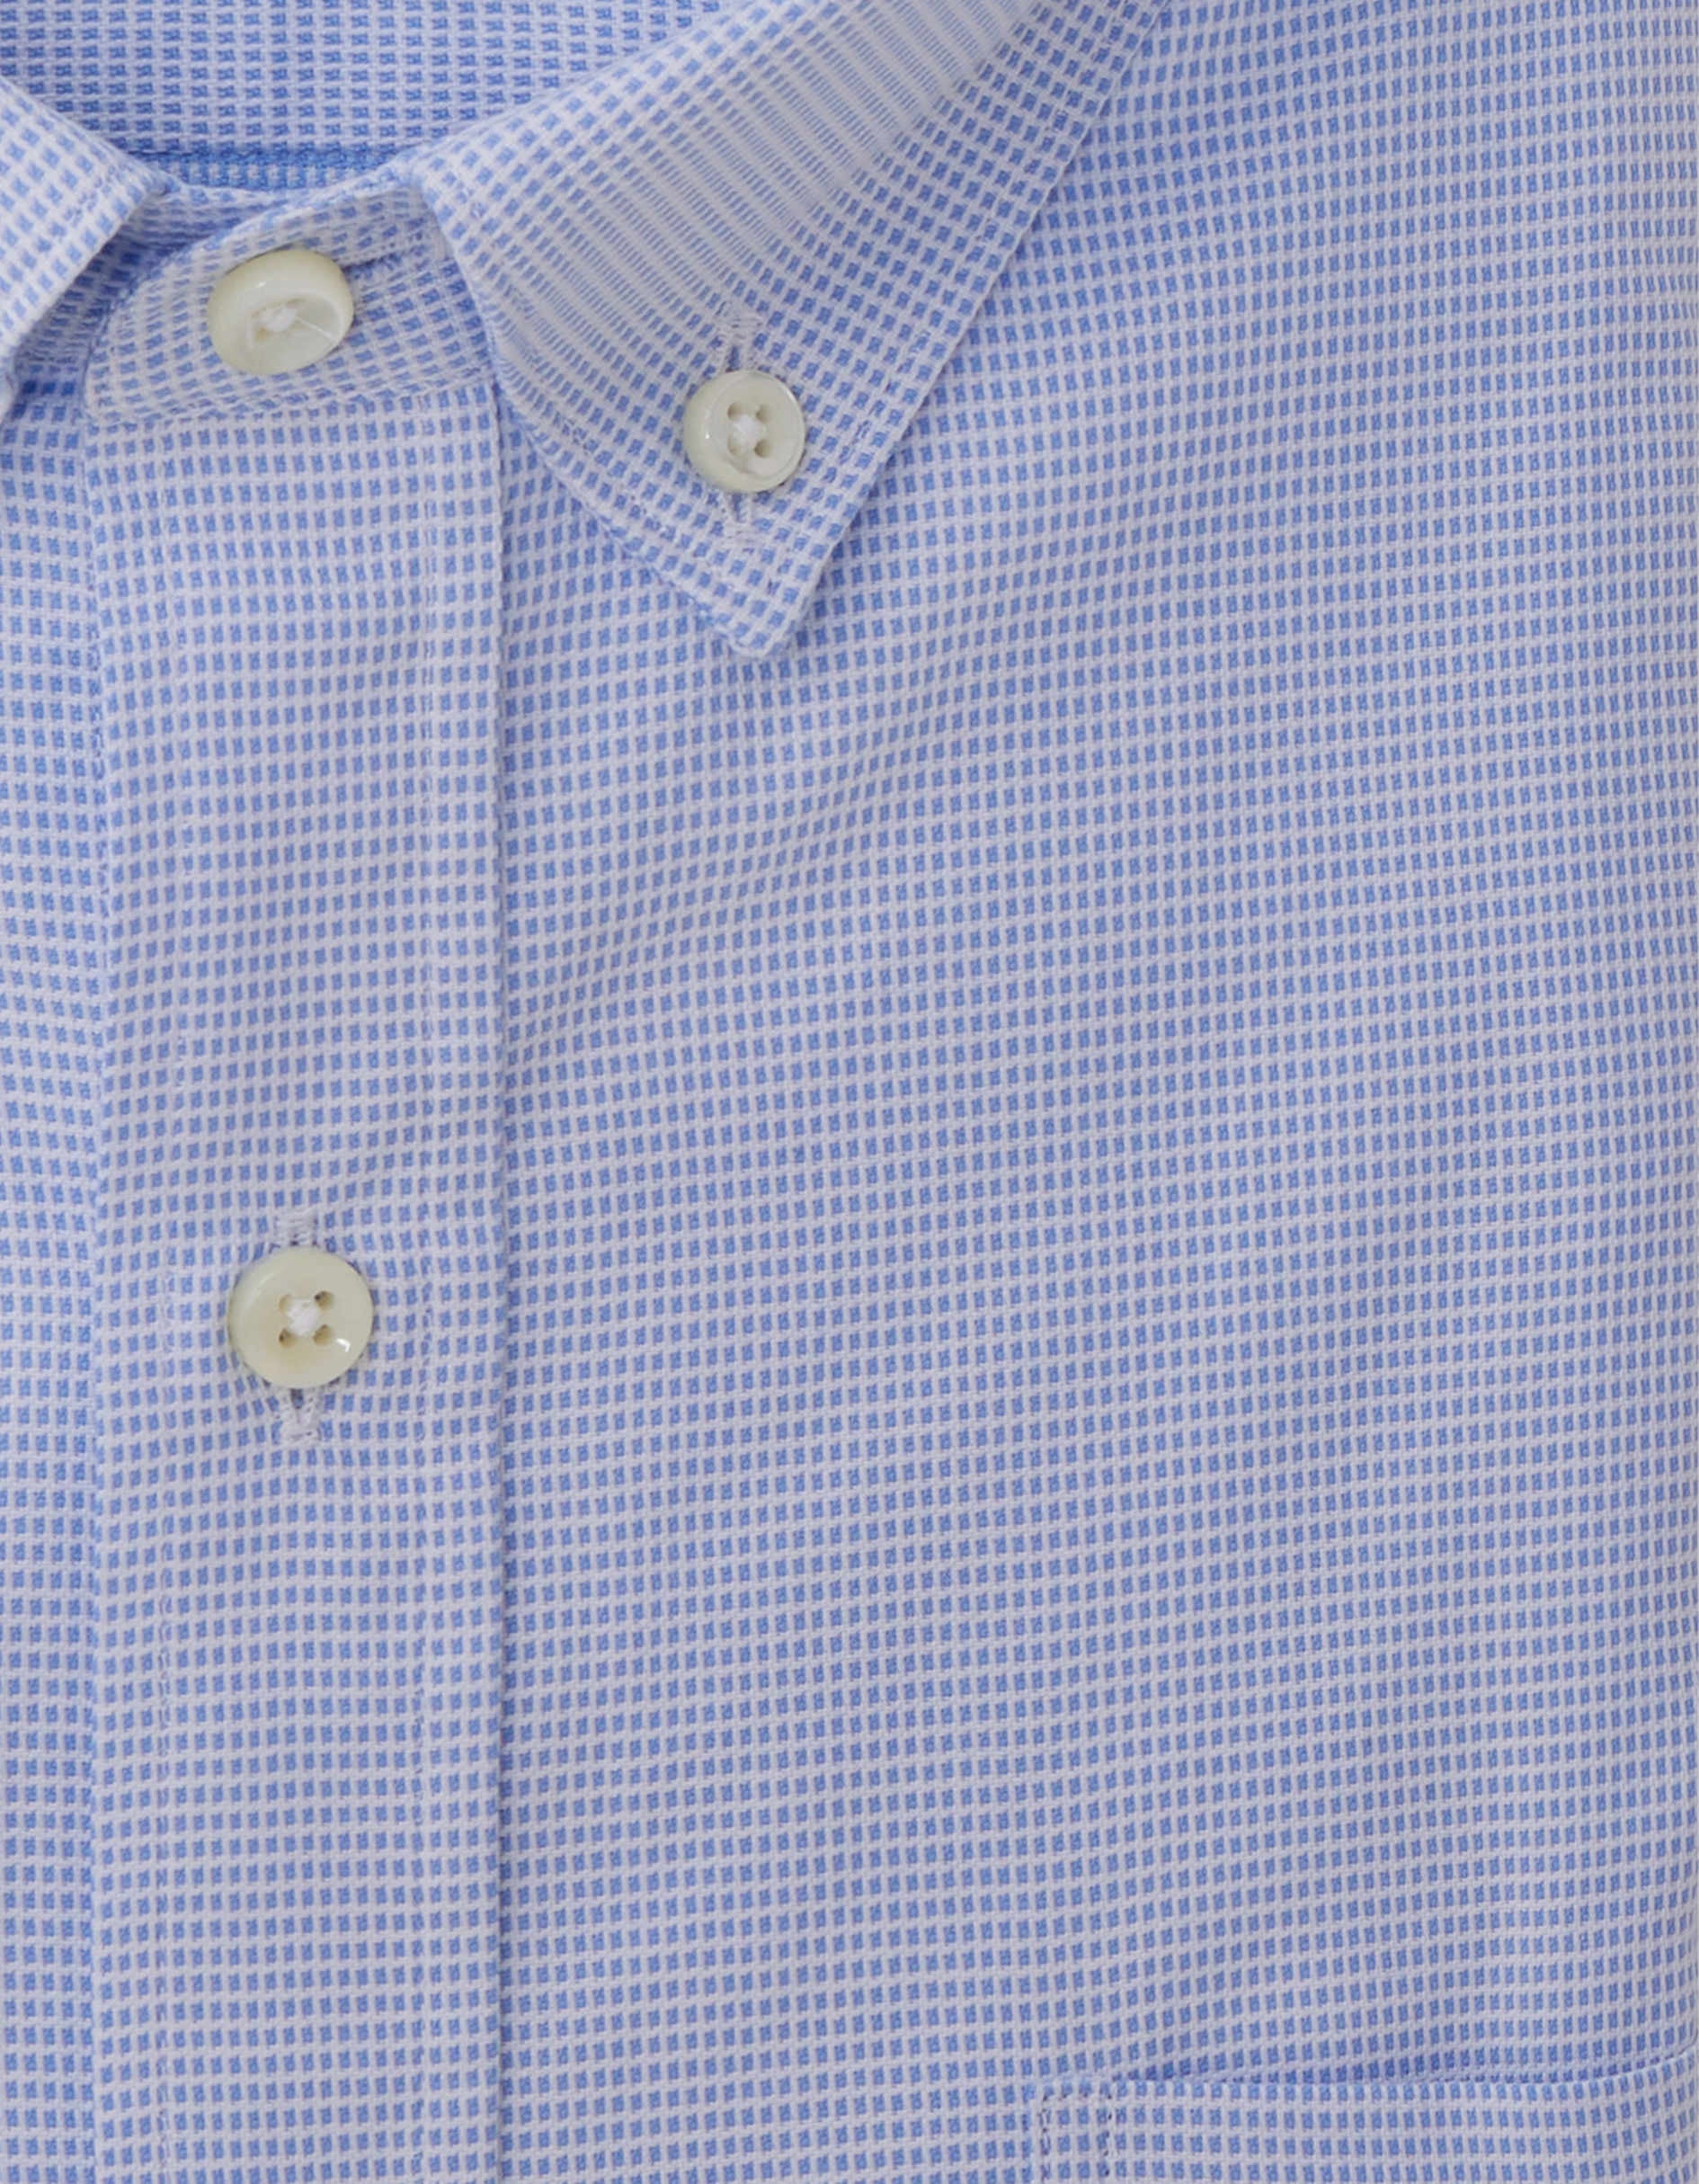 Classic shirt short sleeves blue - Shaped - American Collar